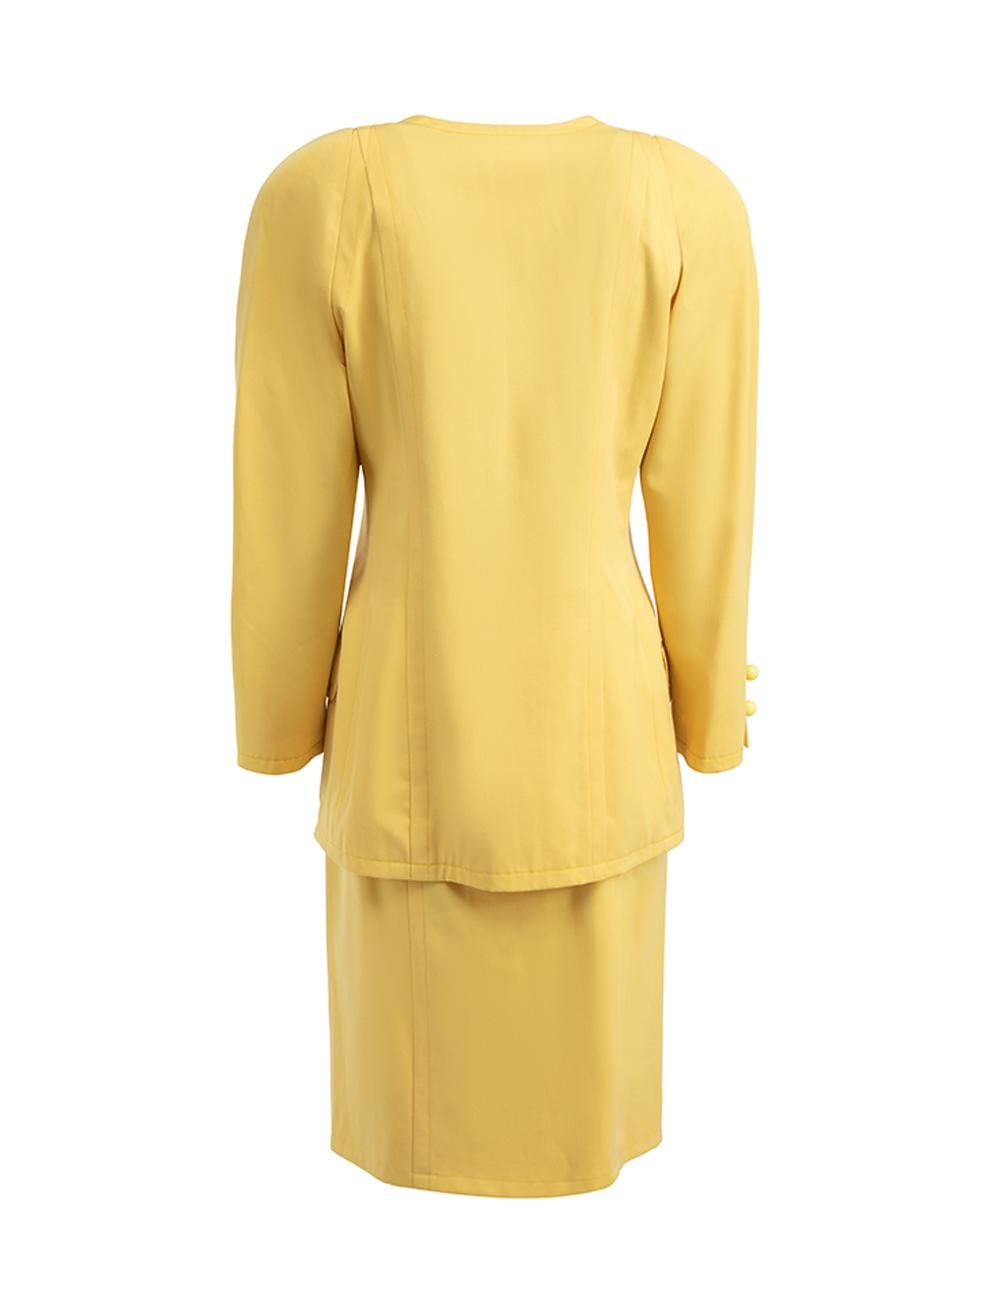 Pre-Loved Le Dix Balenciaga Women's Vintage Yellow Jacket and Skirt Set 1